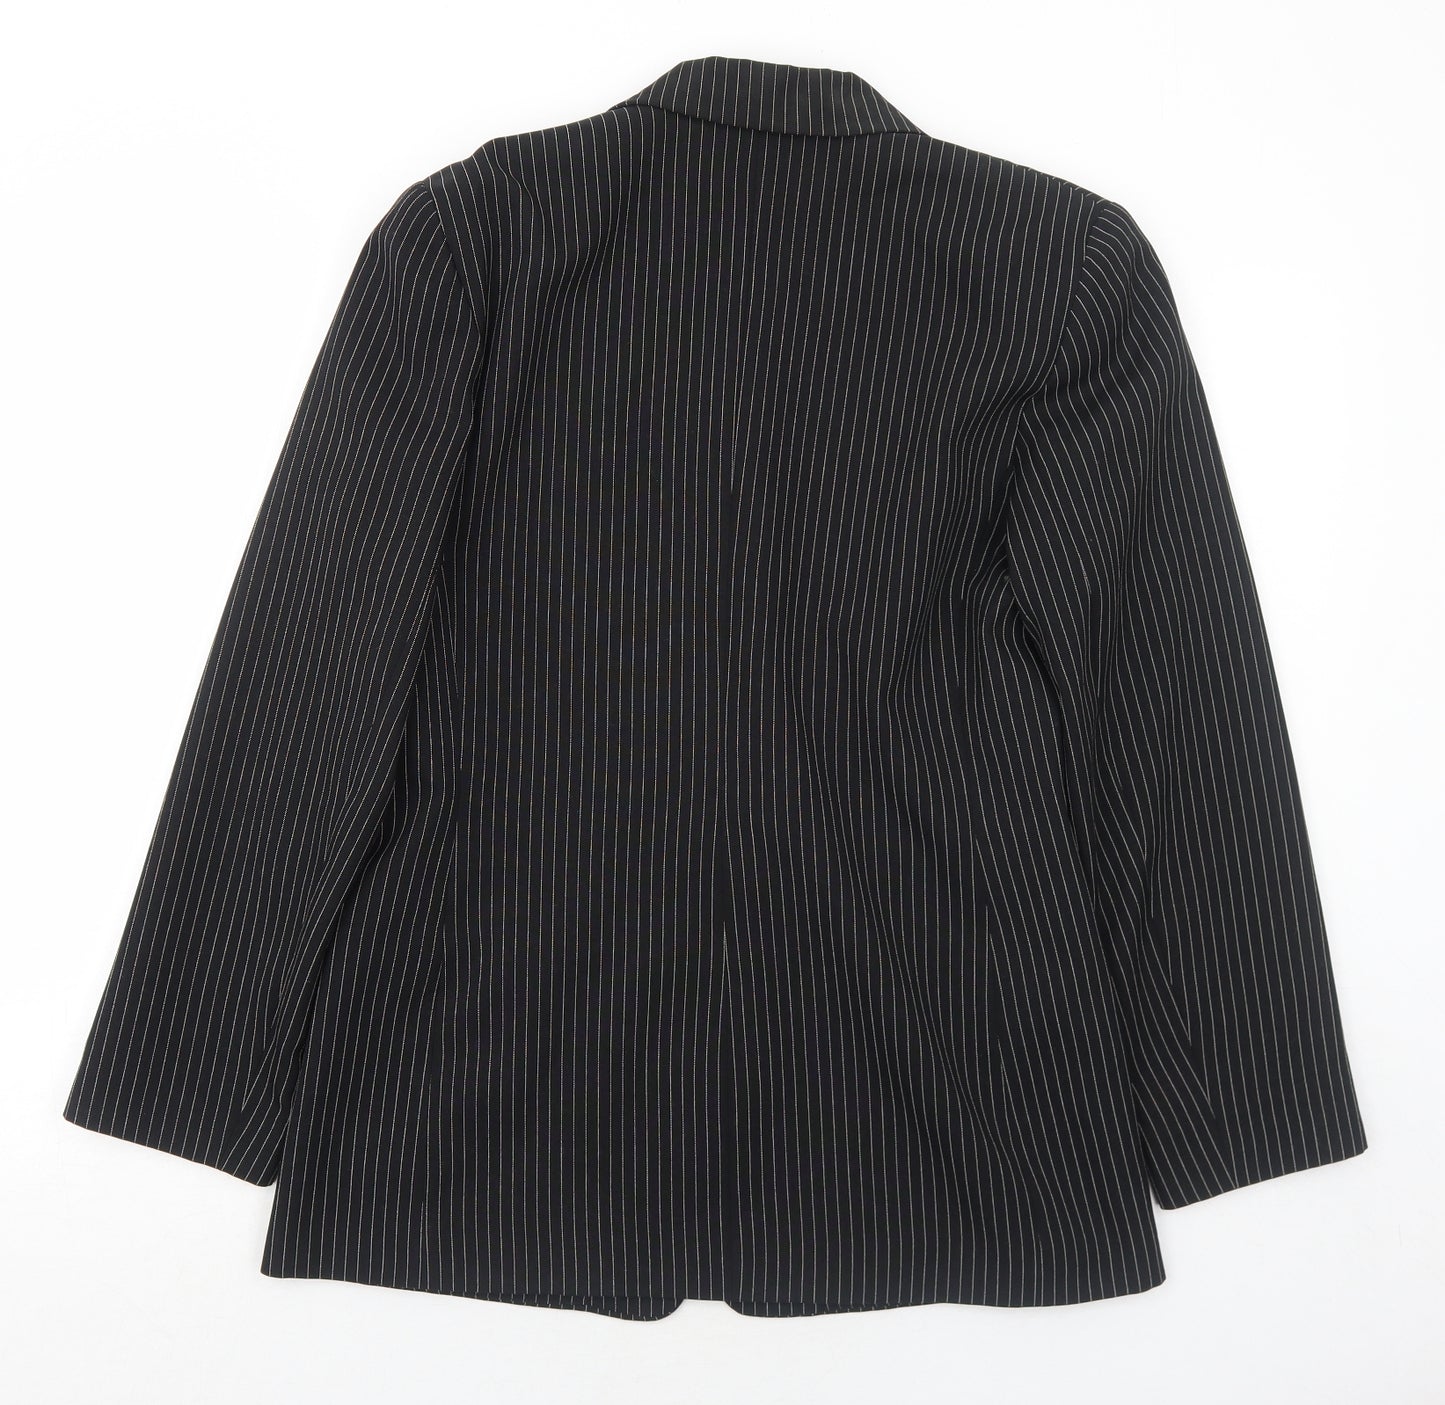 Bonmarché Womens Black Pinstripe Polyester Jacket Suit Jacket Size 14